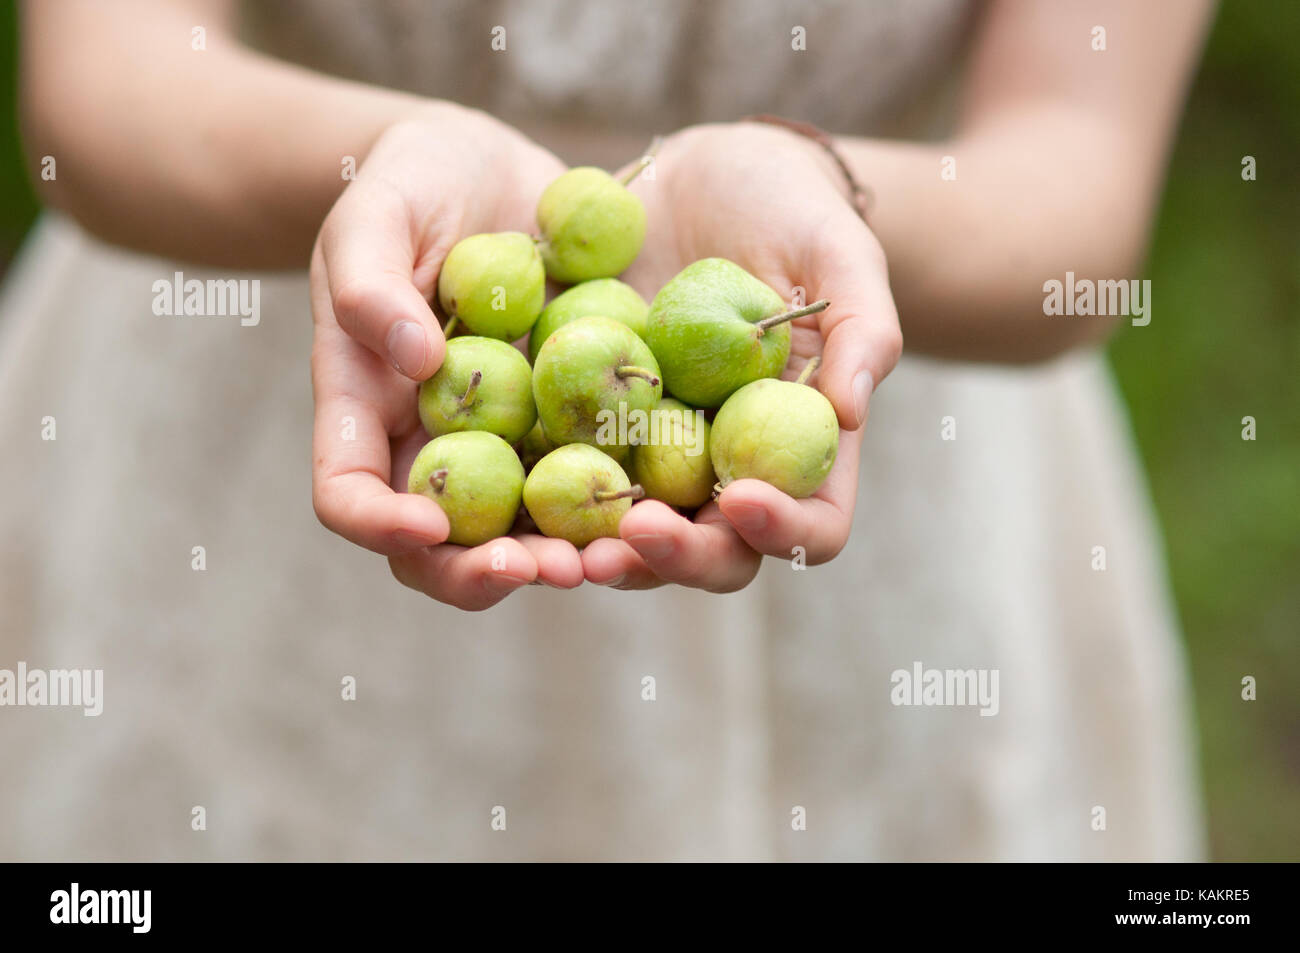 https://c8.alamy.com/comp/KAKRE5/fresh-little-apples-natural-and-healthy-gifts-of-naturemodel-is-holding-KAKRE5.jpg